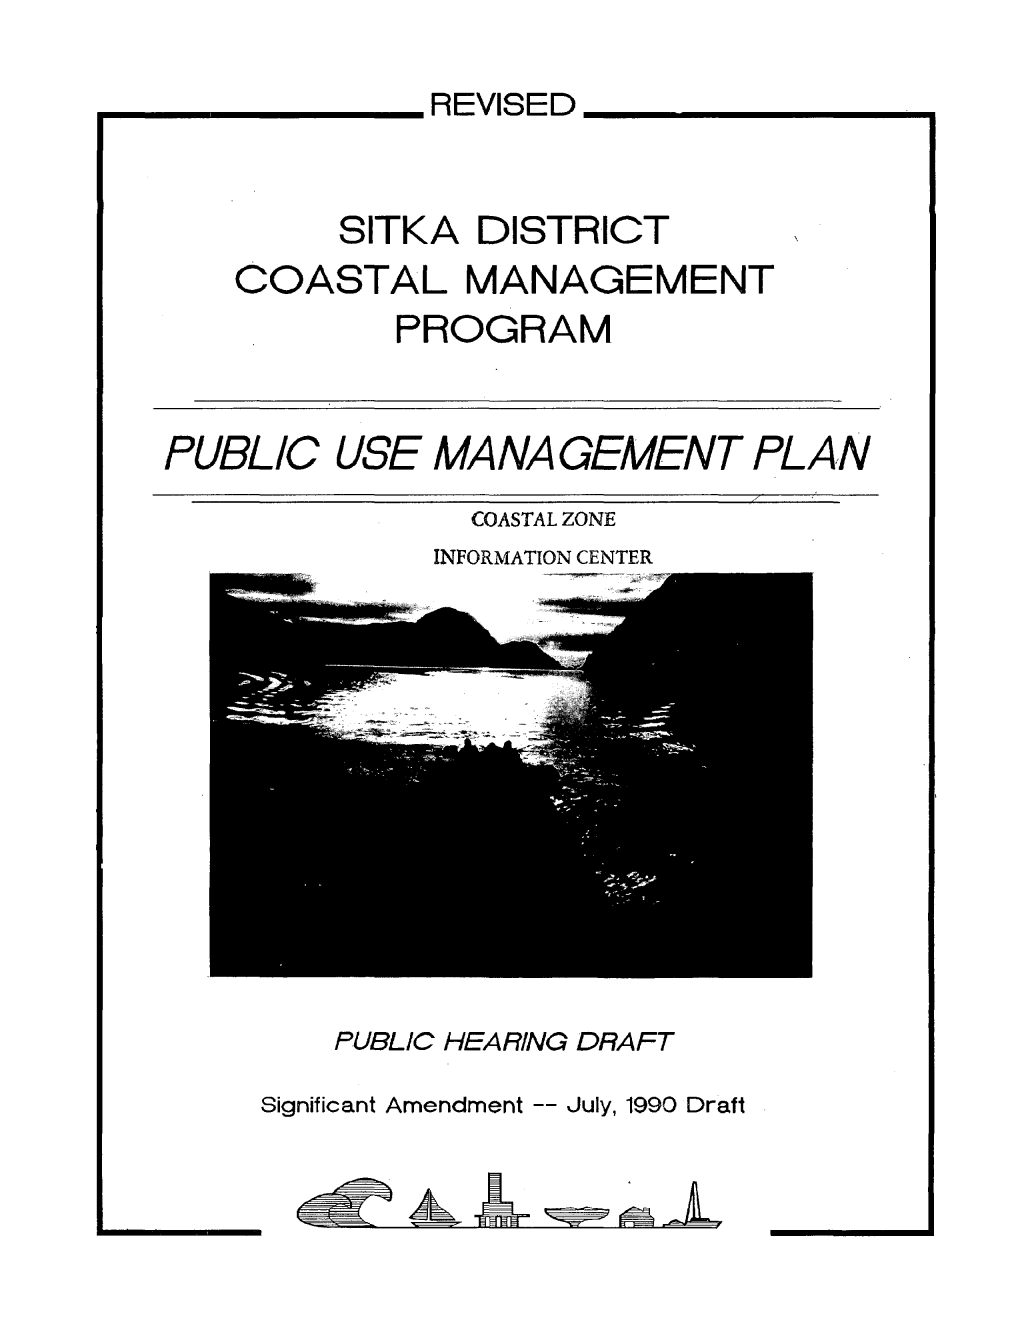 Revised Sitka District Coastal Management Program, Public Use